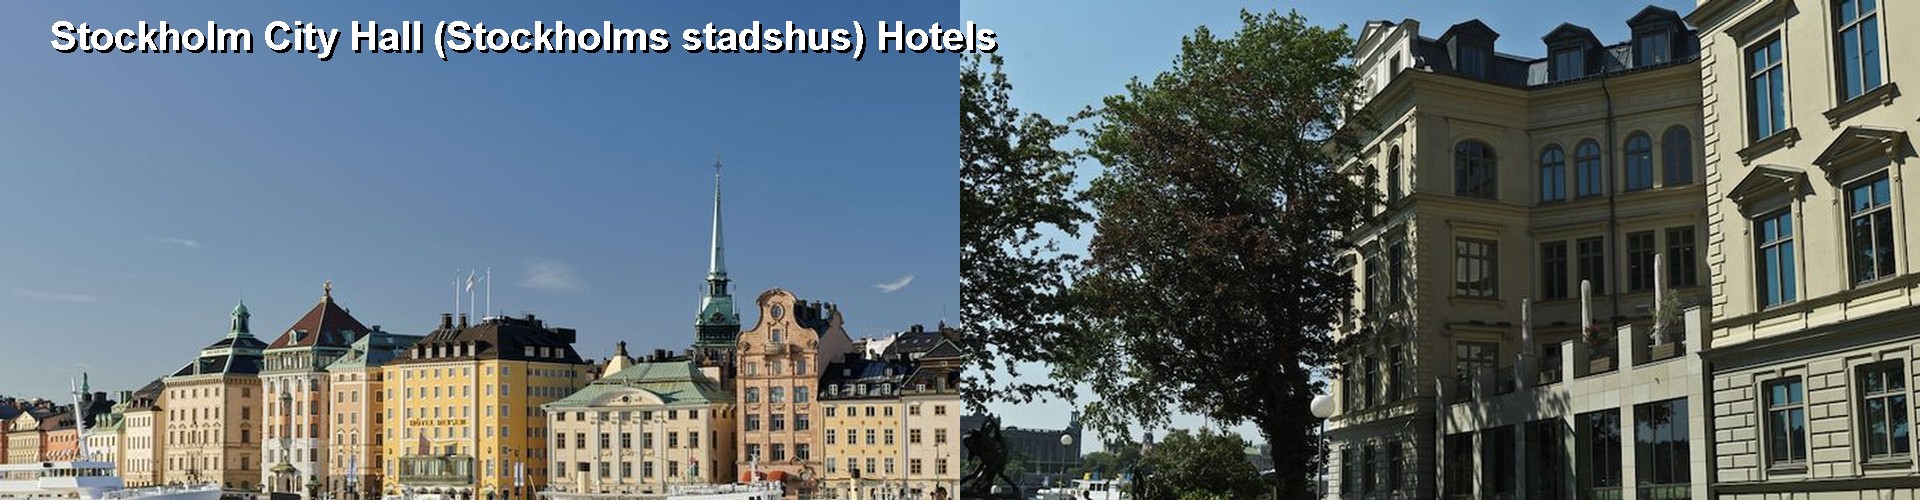 5 Best Hotels near Stockholm City Hall (Stockholms stadshus)